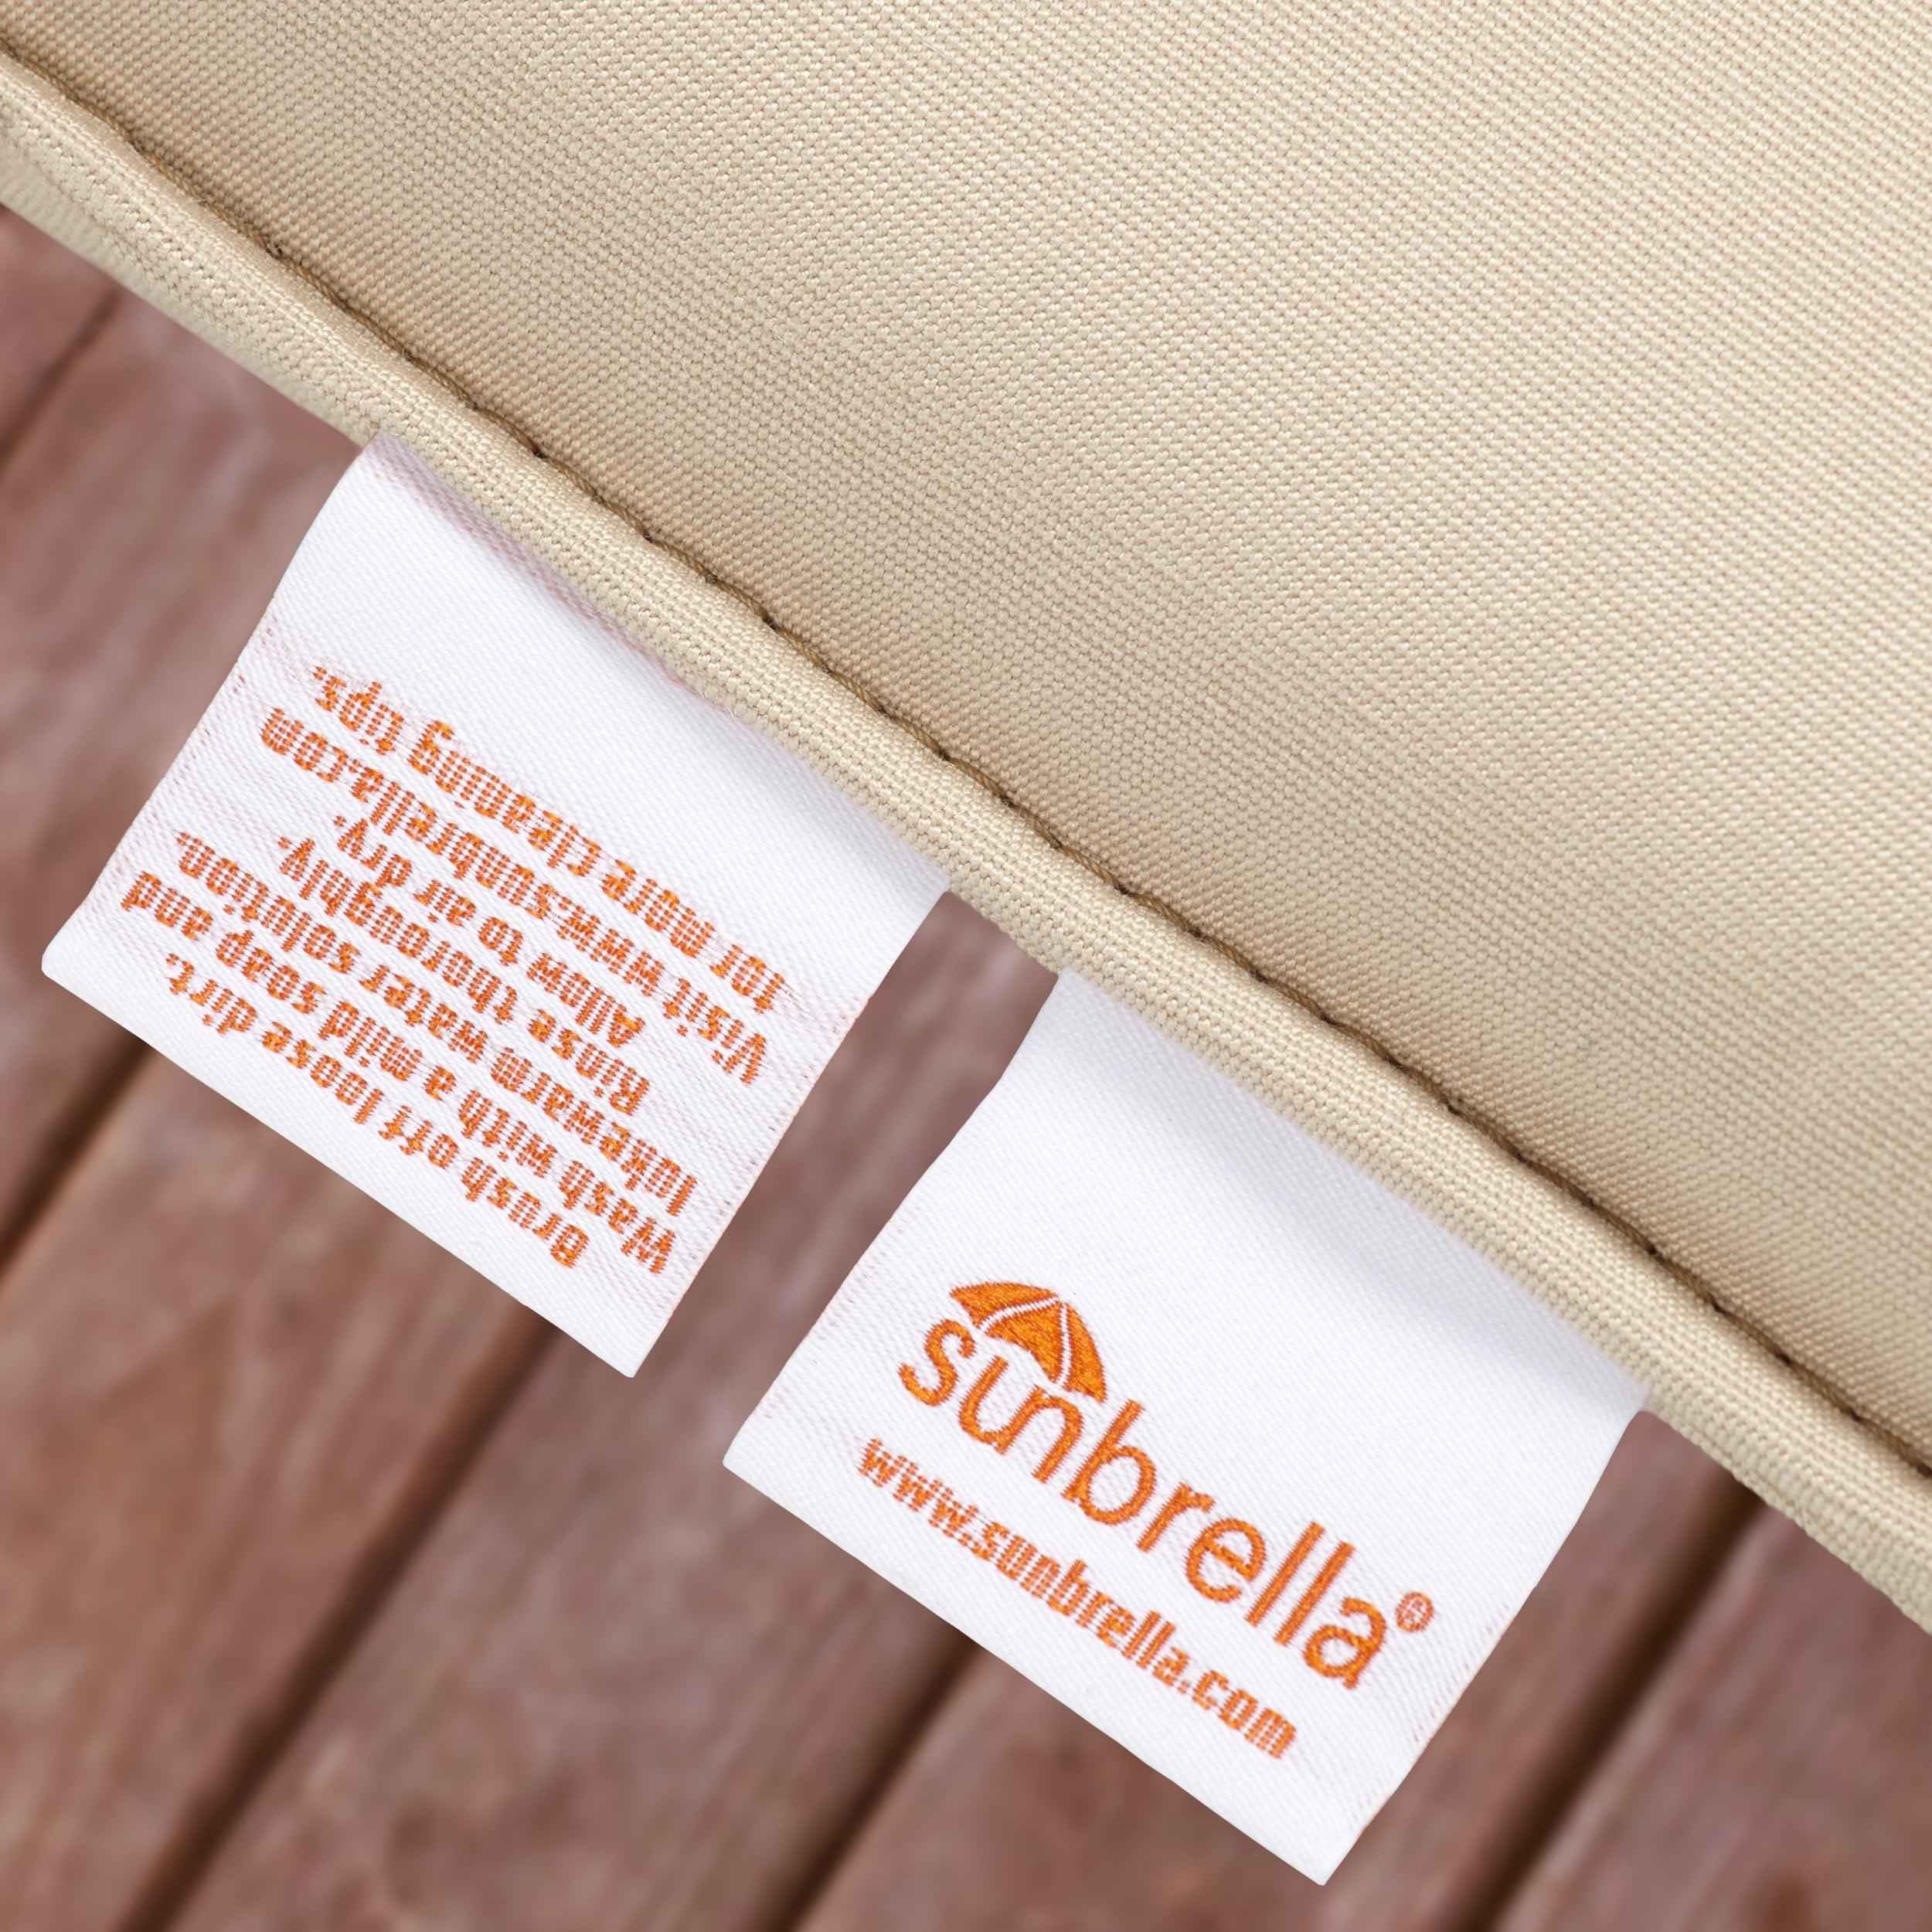 Sunbrella Instinct Deep Seating Loveseat Pillow & Cushion Set - Sorra Home